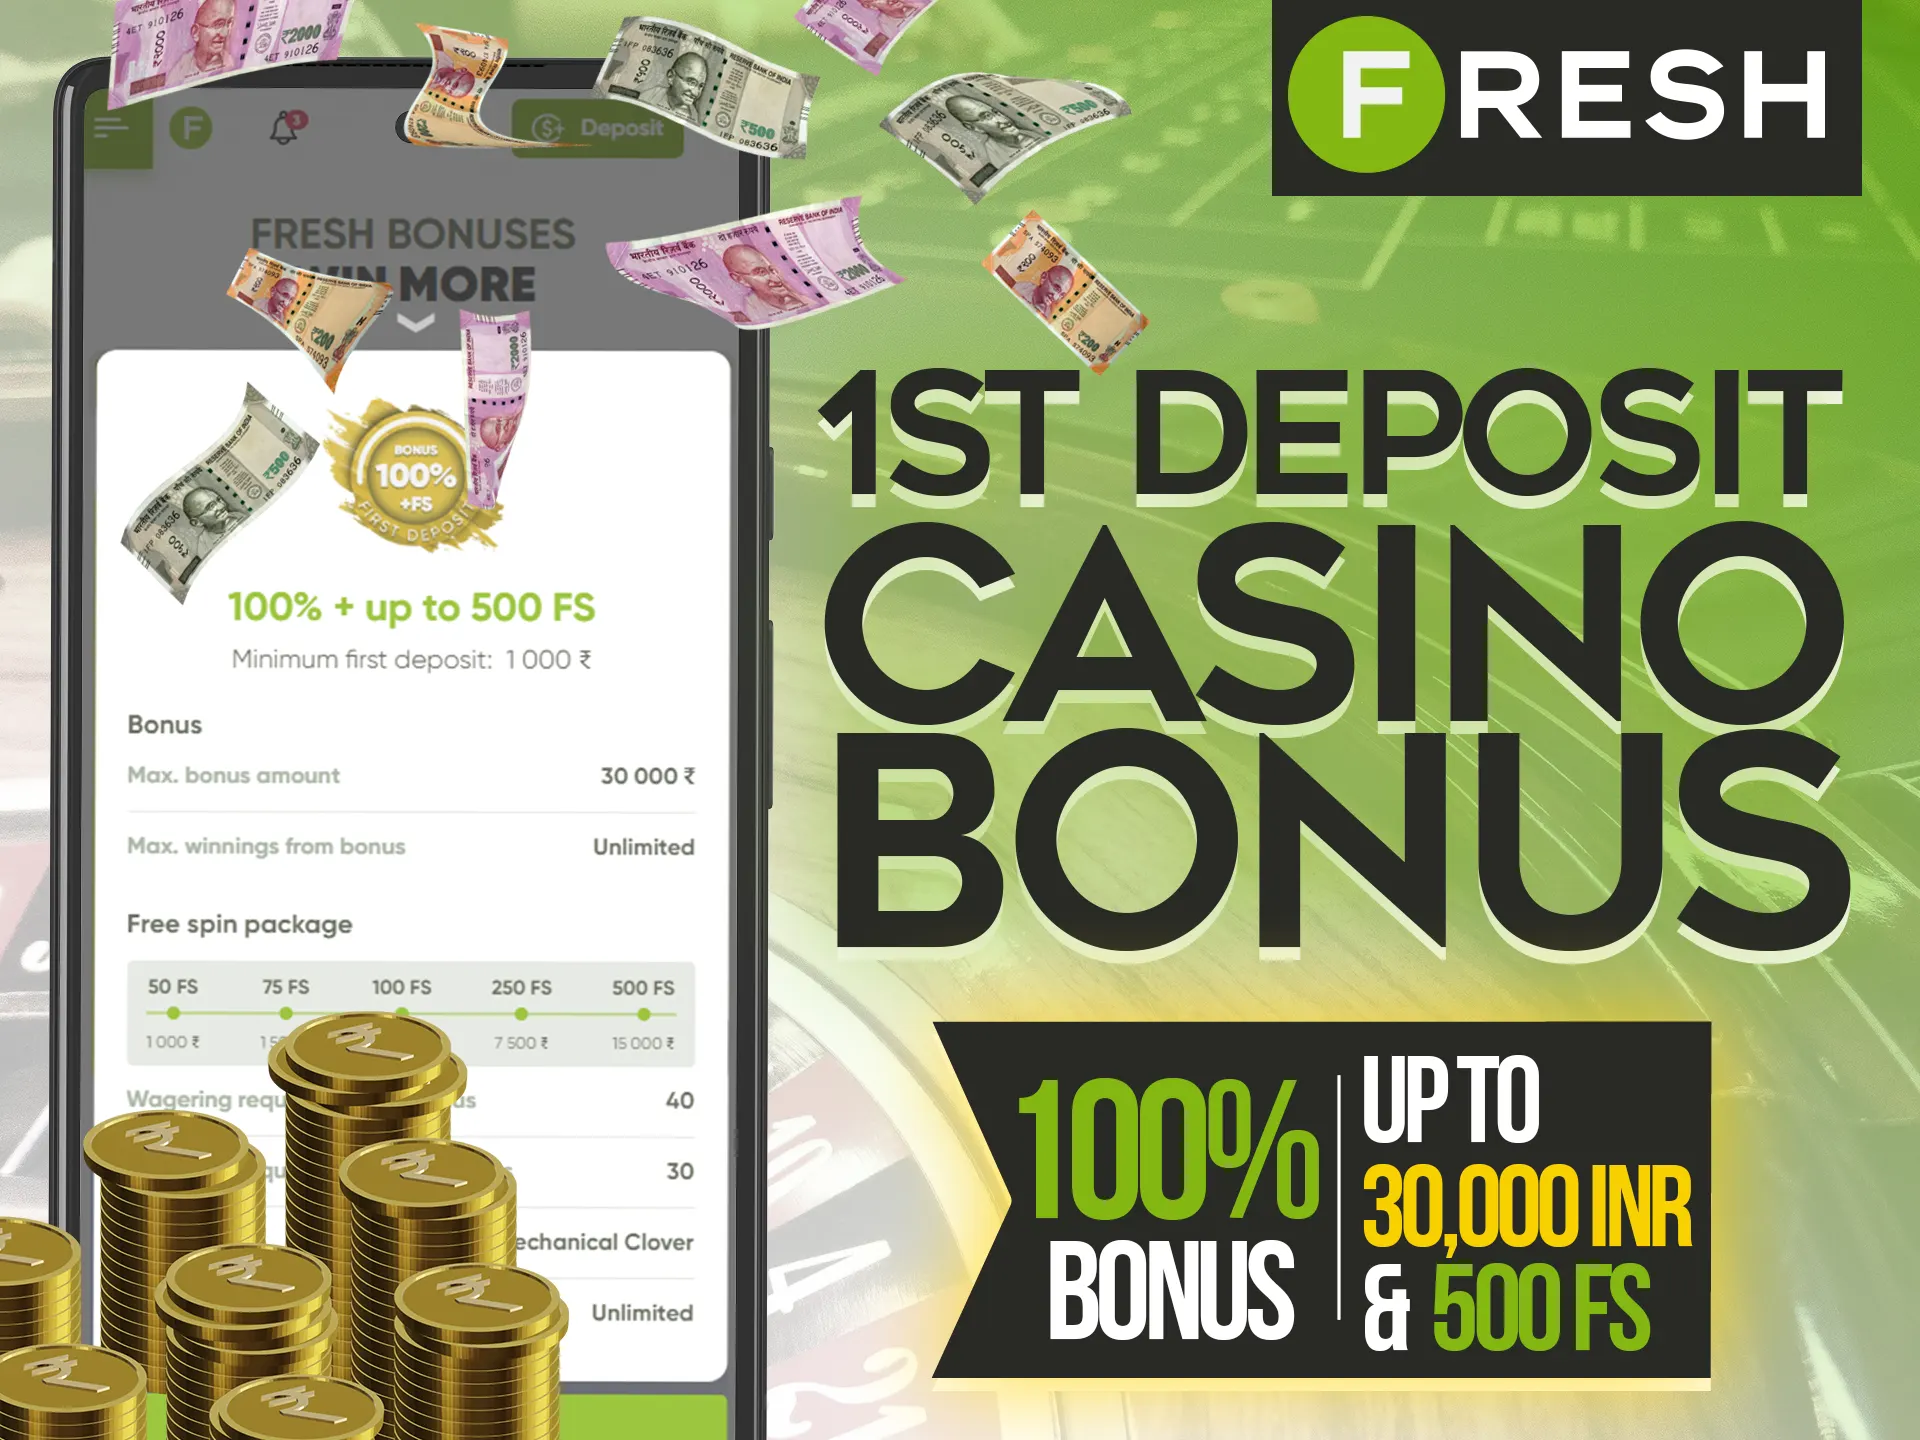 Choose a casino bonus during registration in the Fresh Casino app.